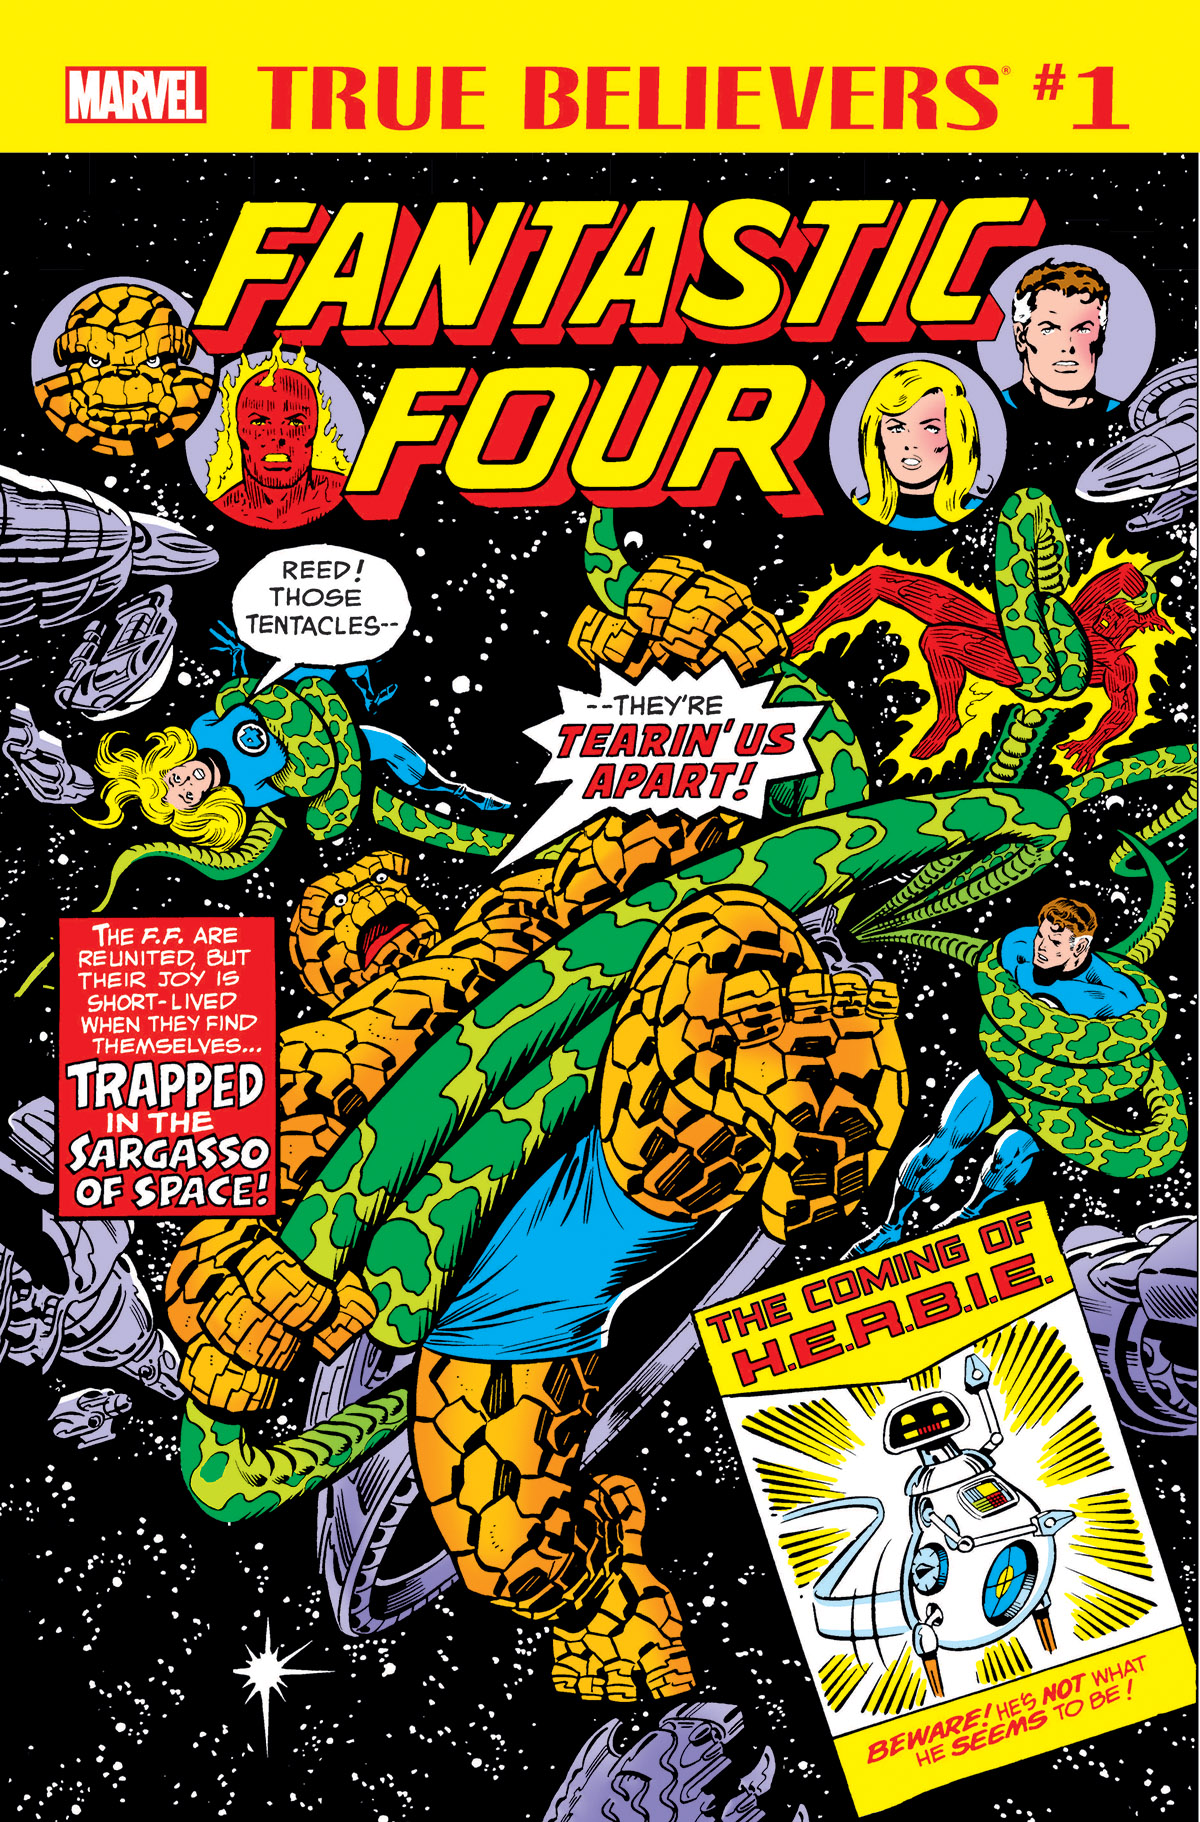 True Believers: Fantastic Four - The Coming of H.E.R.B.I.E. (2018) #1